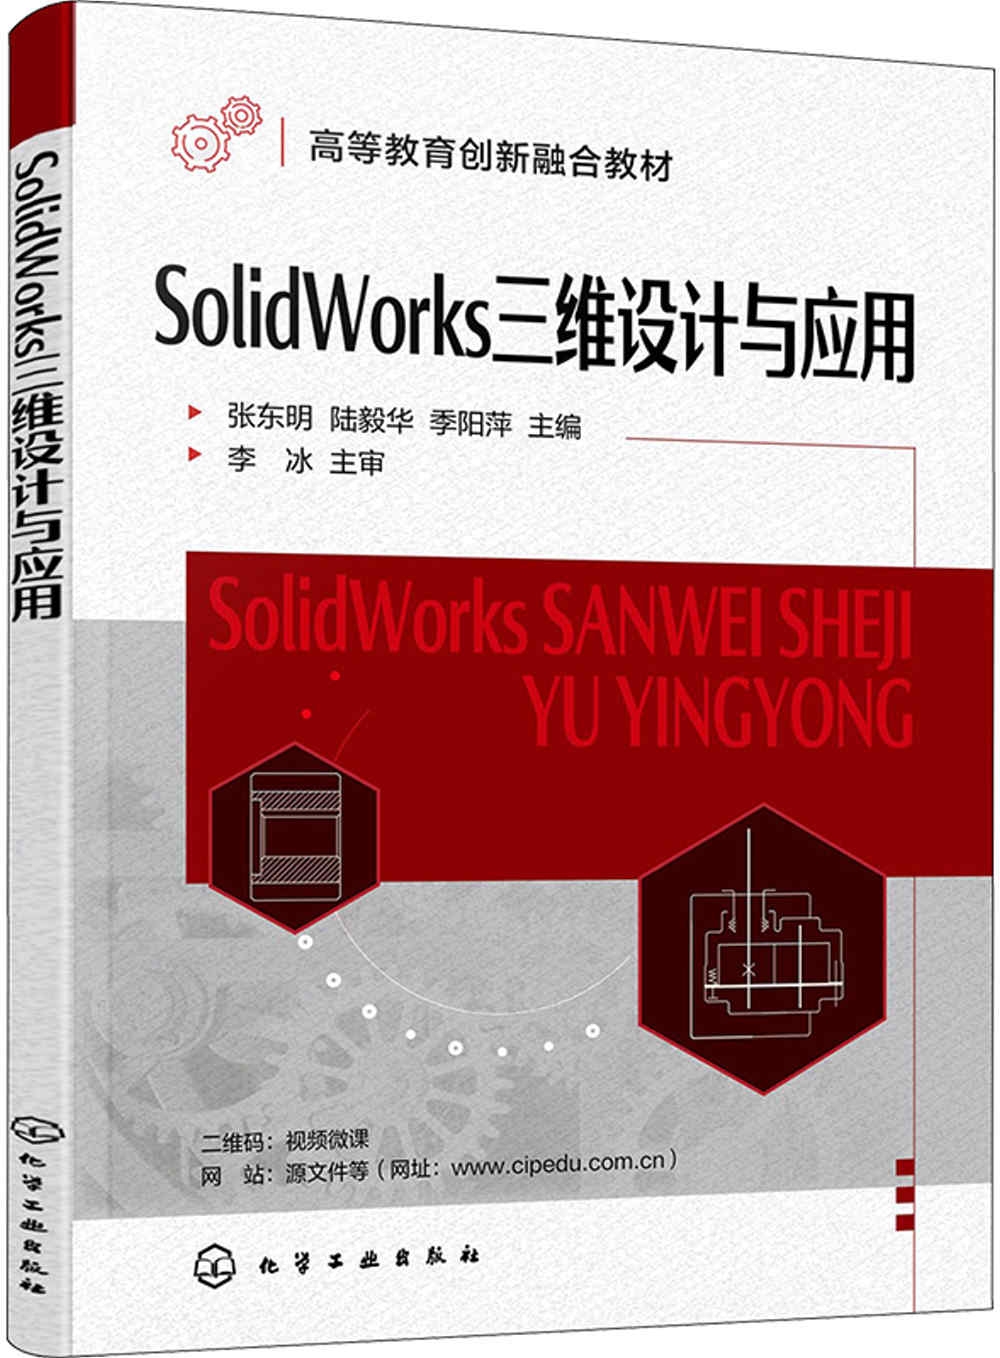 SolidWorks三維設計與應用